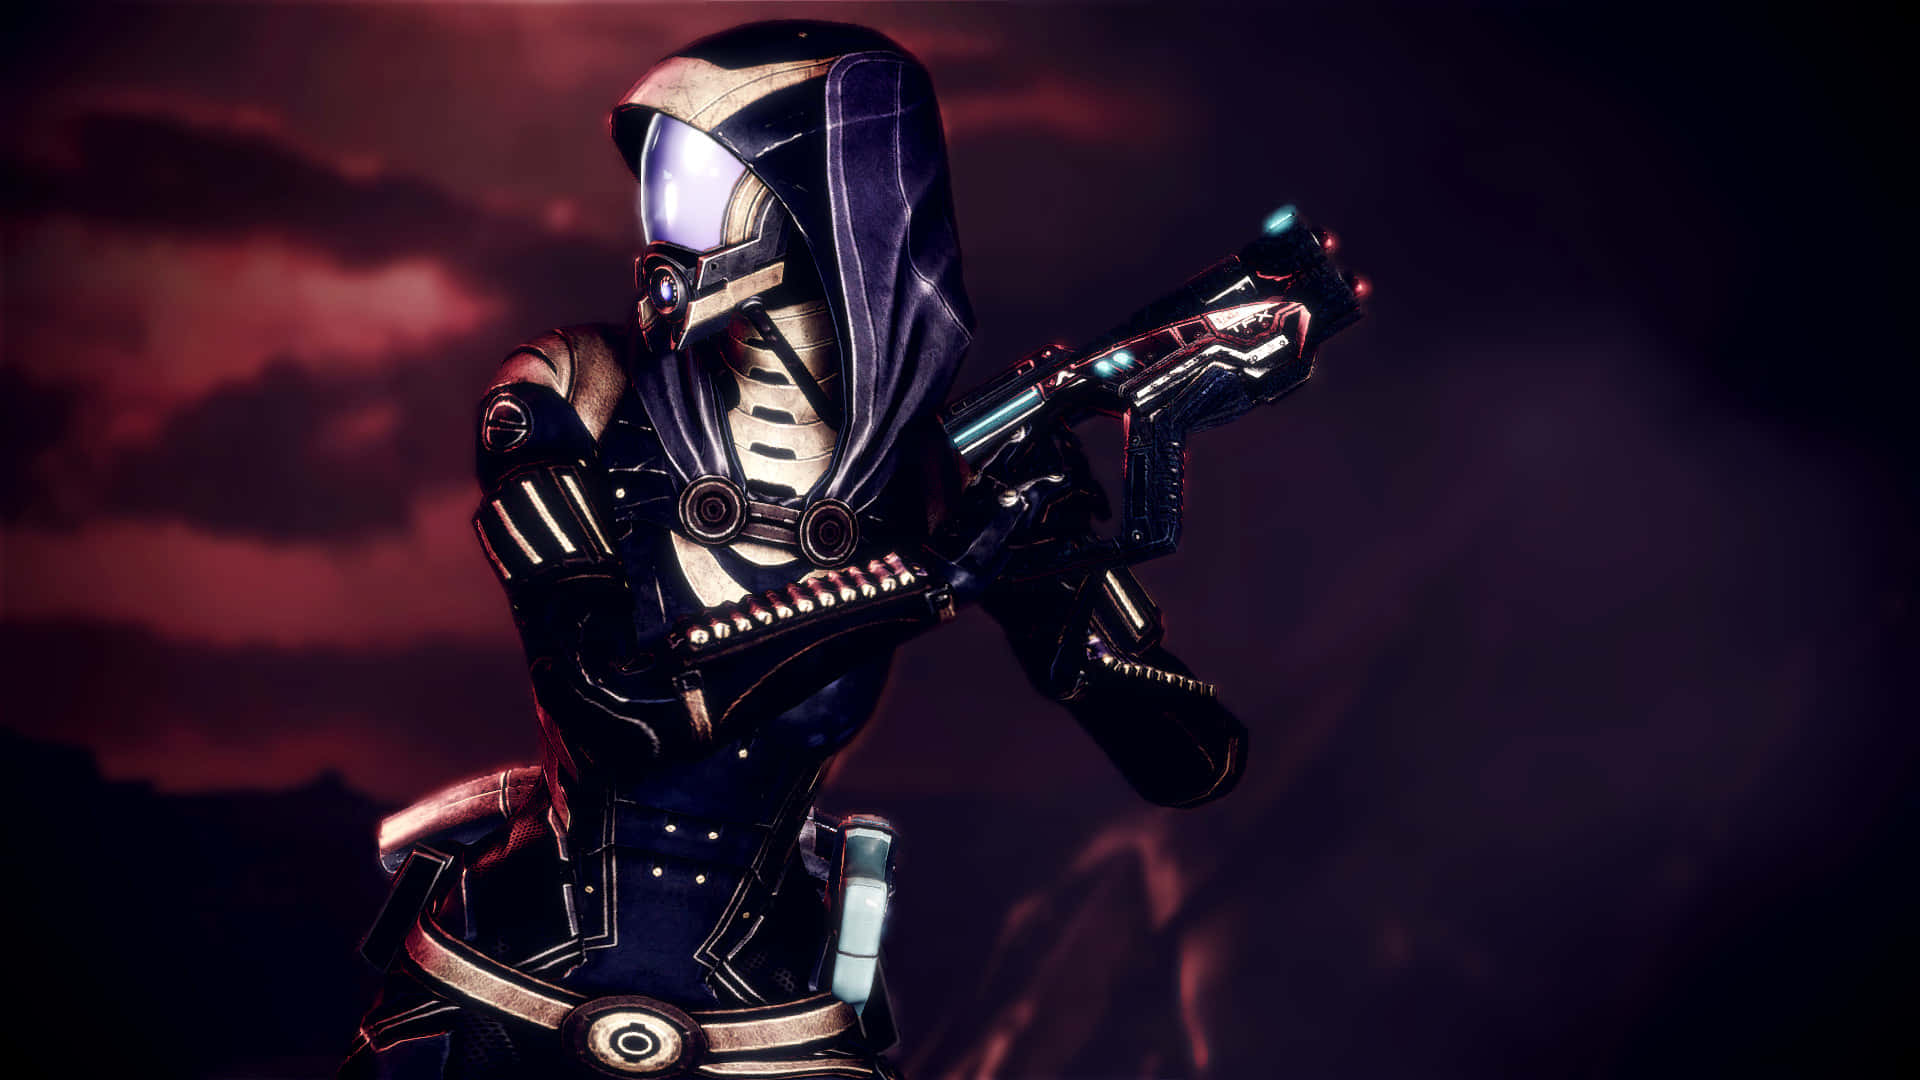 Tali'Zorah, an Iconic Character from Mass Effect Wallpaper